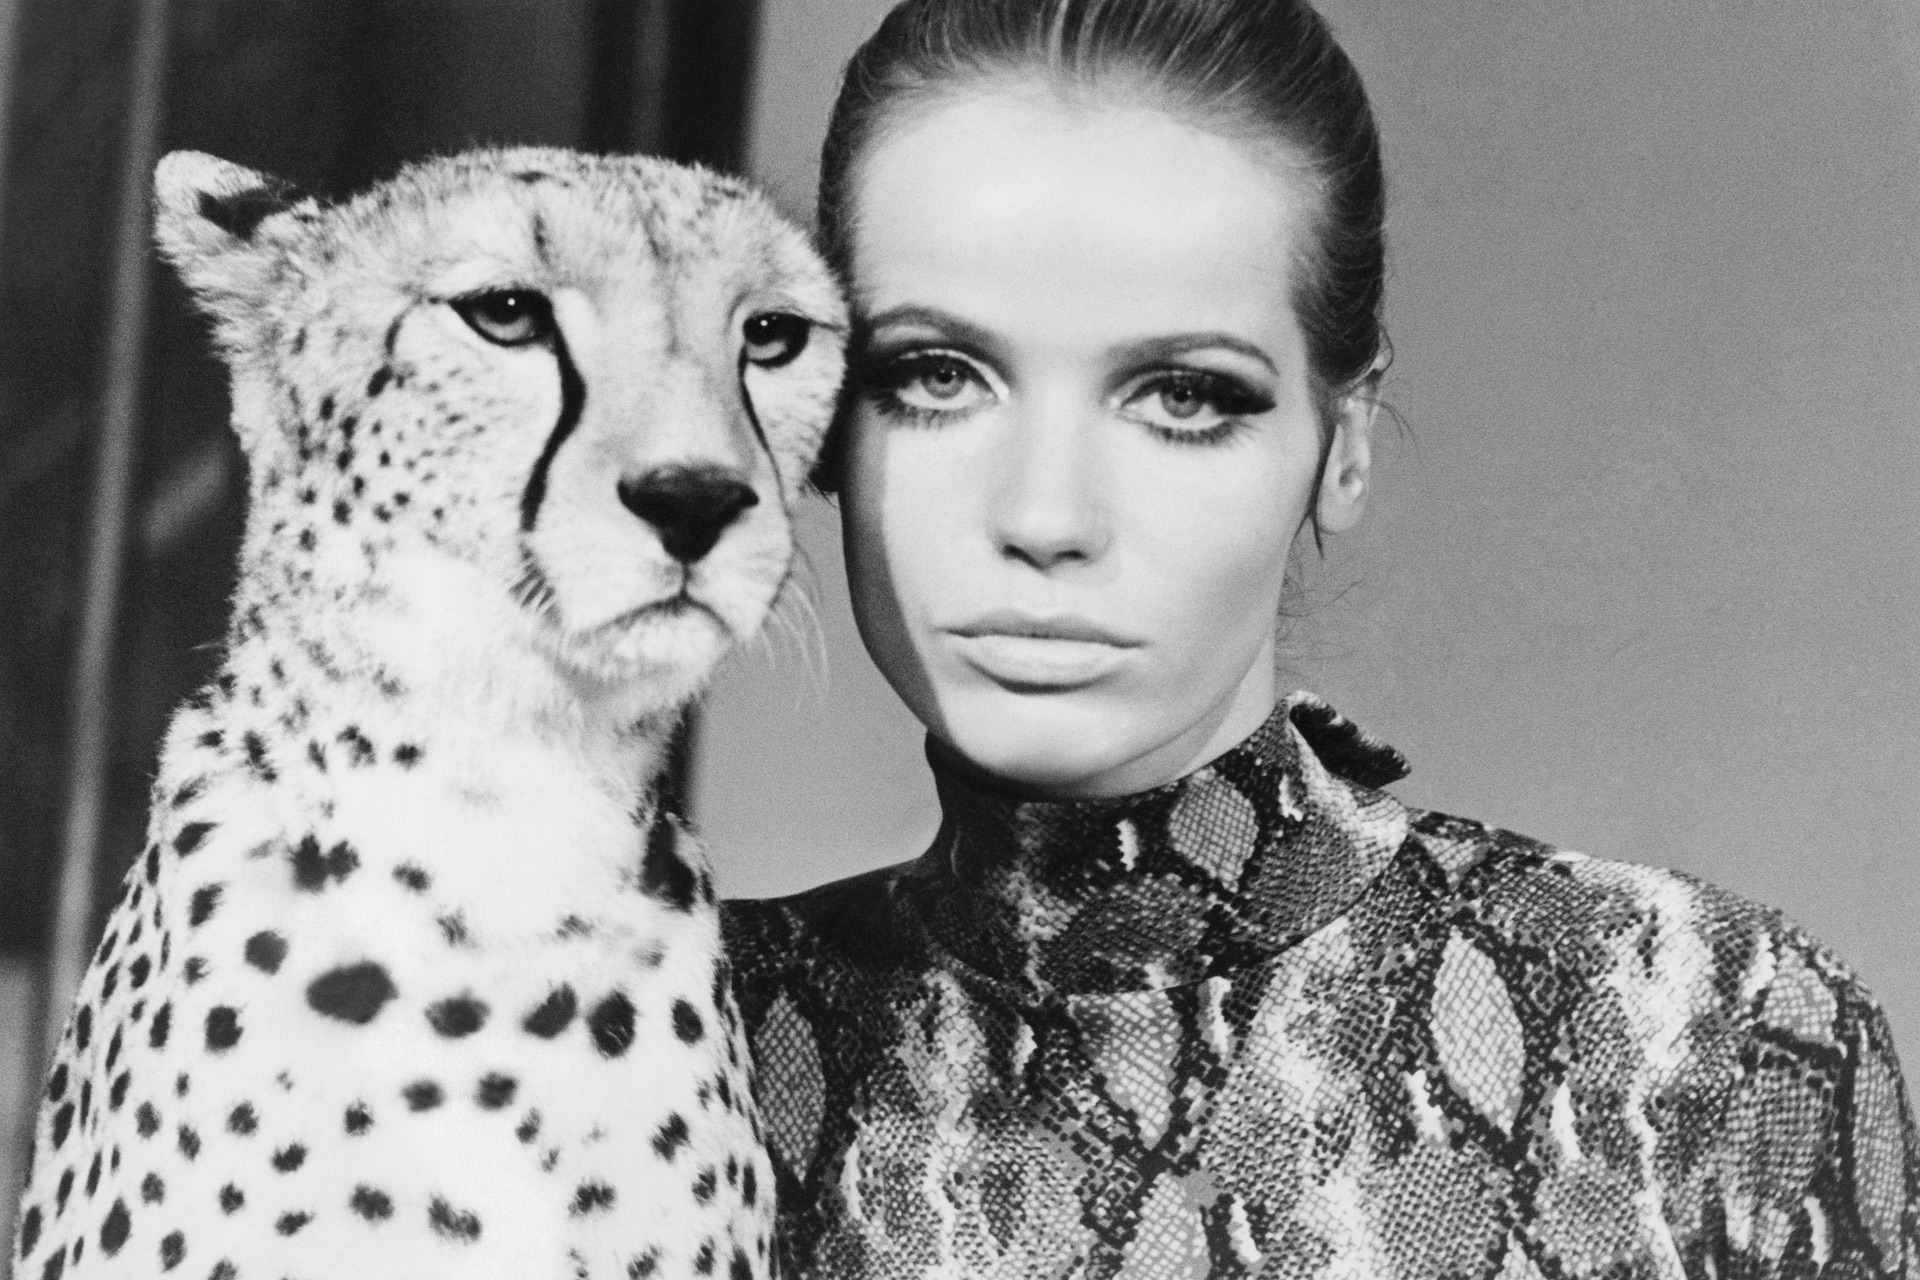 Franco Rubartelli, Veruschka, head-to-head with a cheetah, 1967, Vogue 